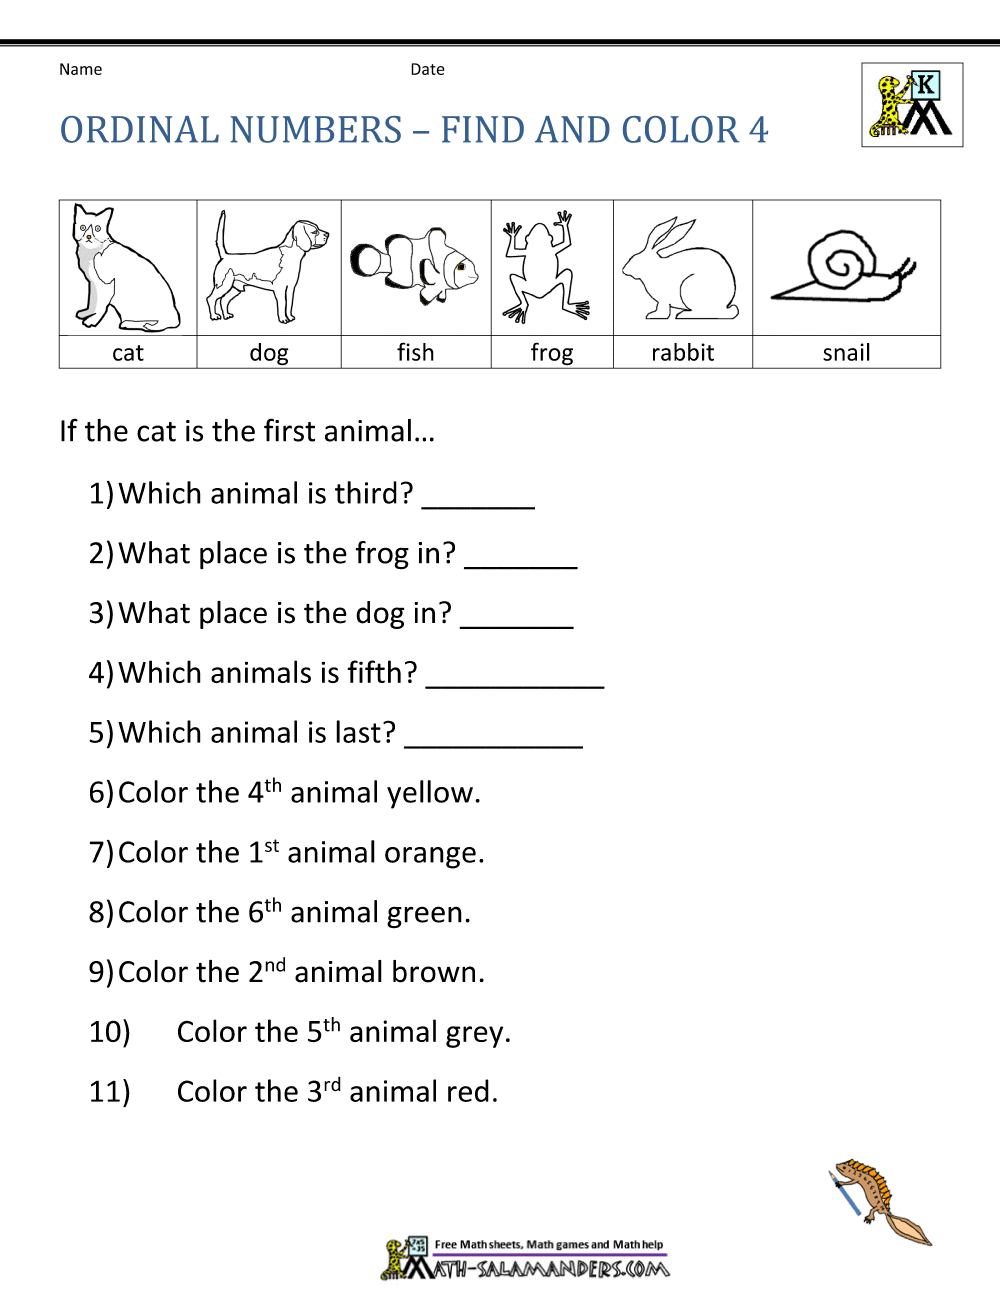 labeling-ordinal-numbers-worksheet-have-fun-teaching